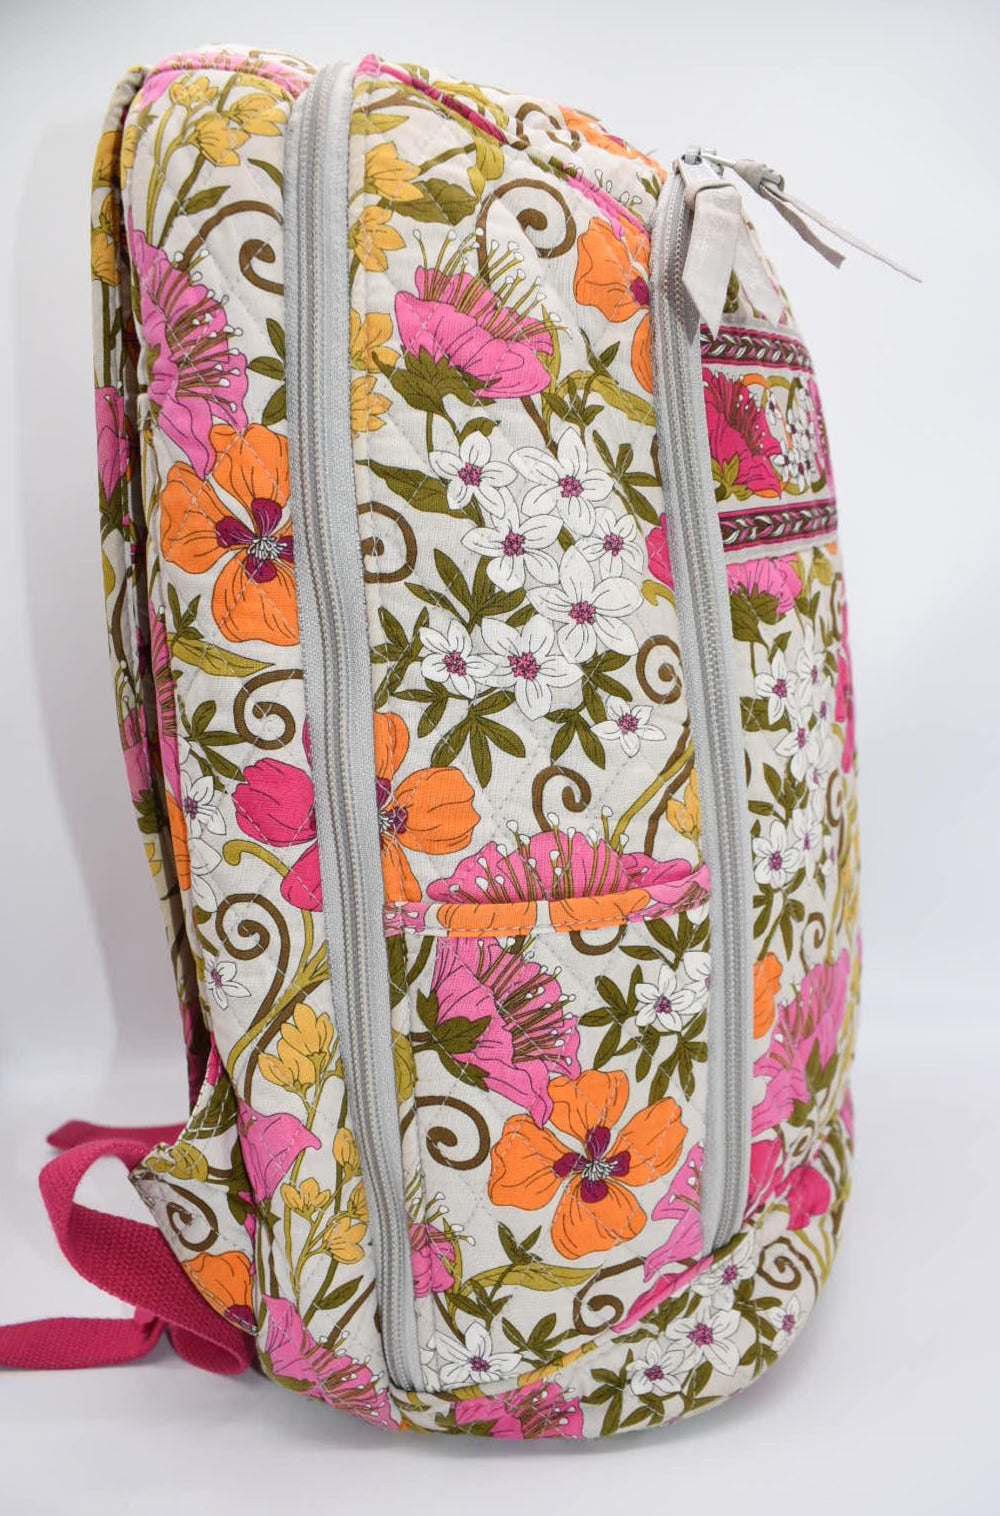 Vera Bradley Laptop Campus Backpack in "Tea Garden" Pattern